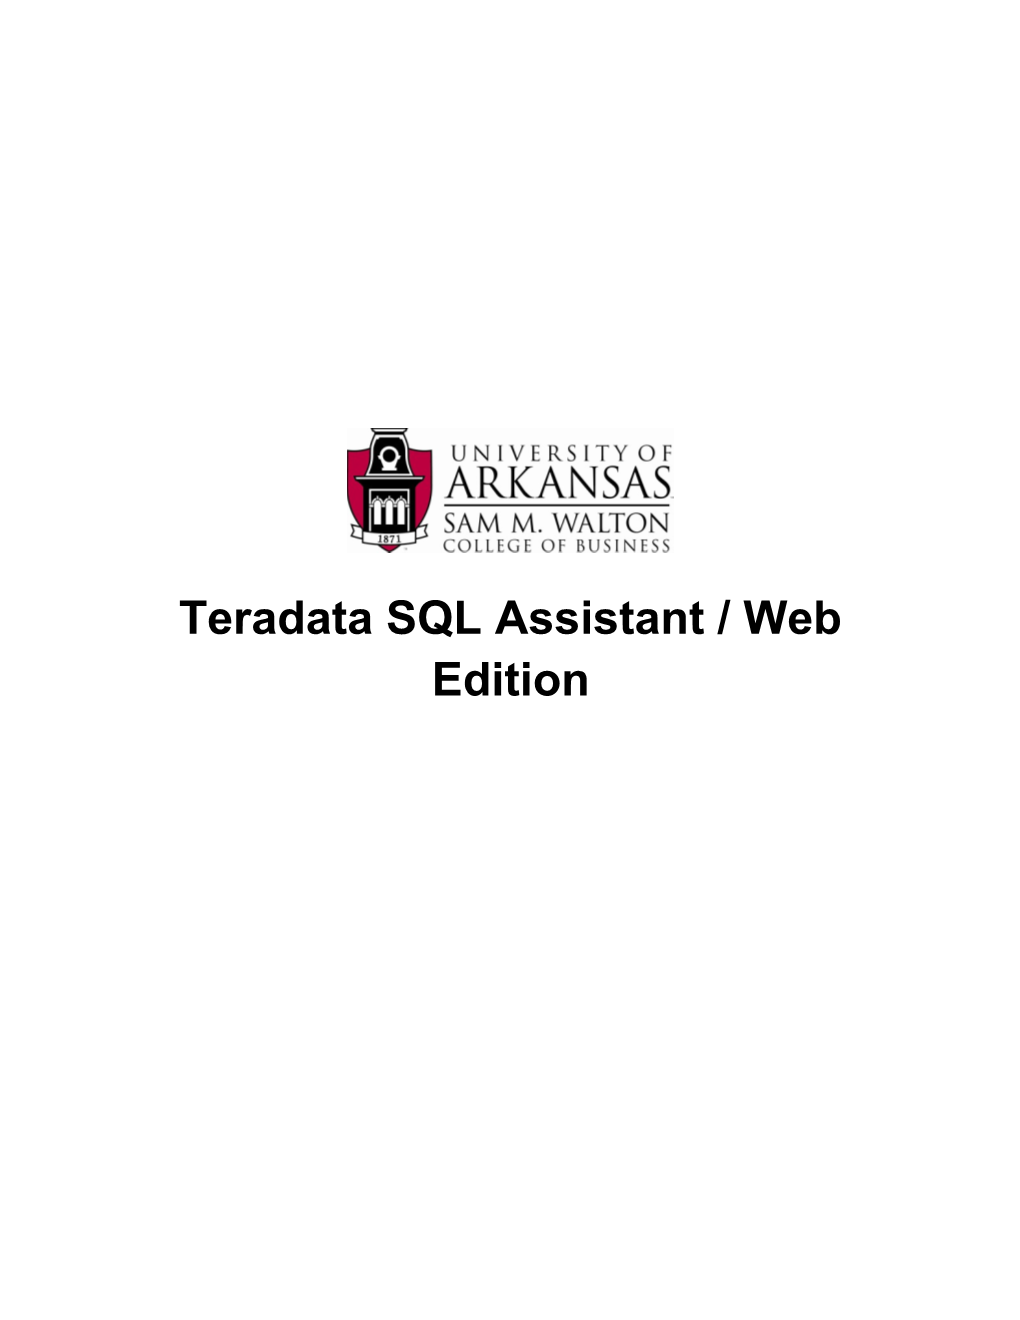 Teradata Web Edition